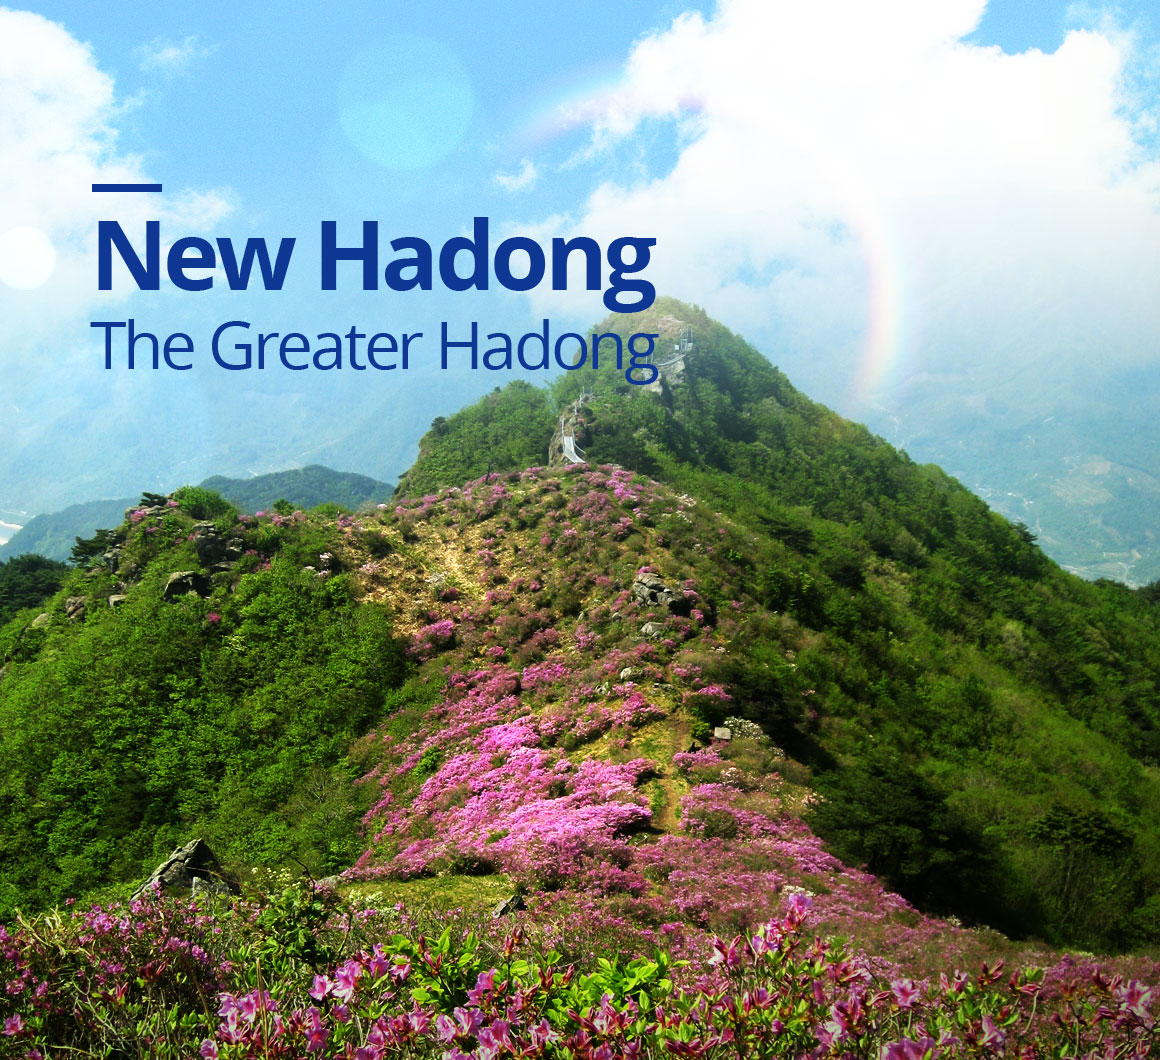 New Hadong. The Greater Hadong